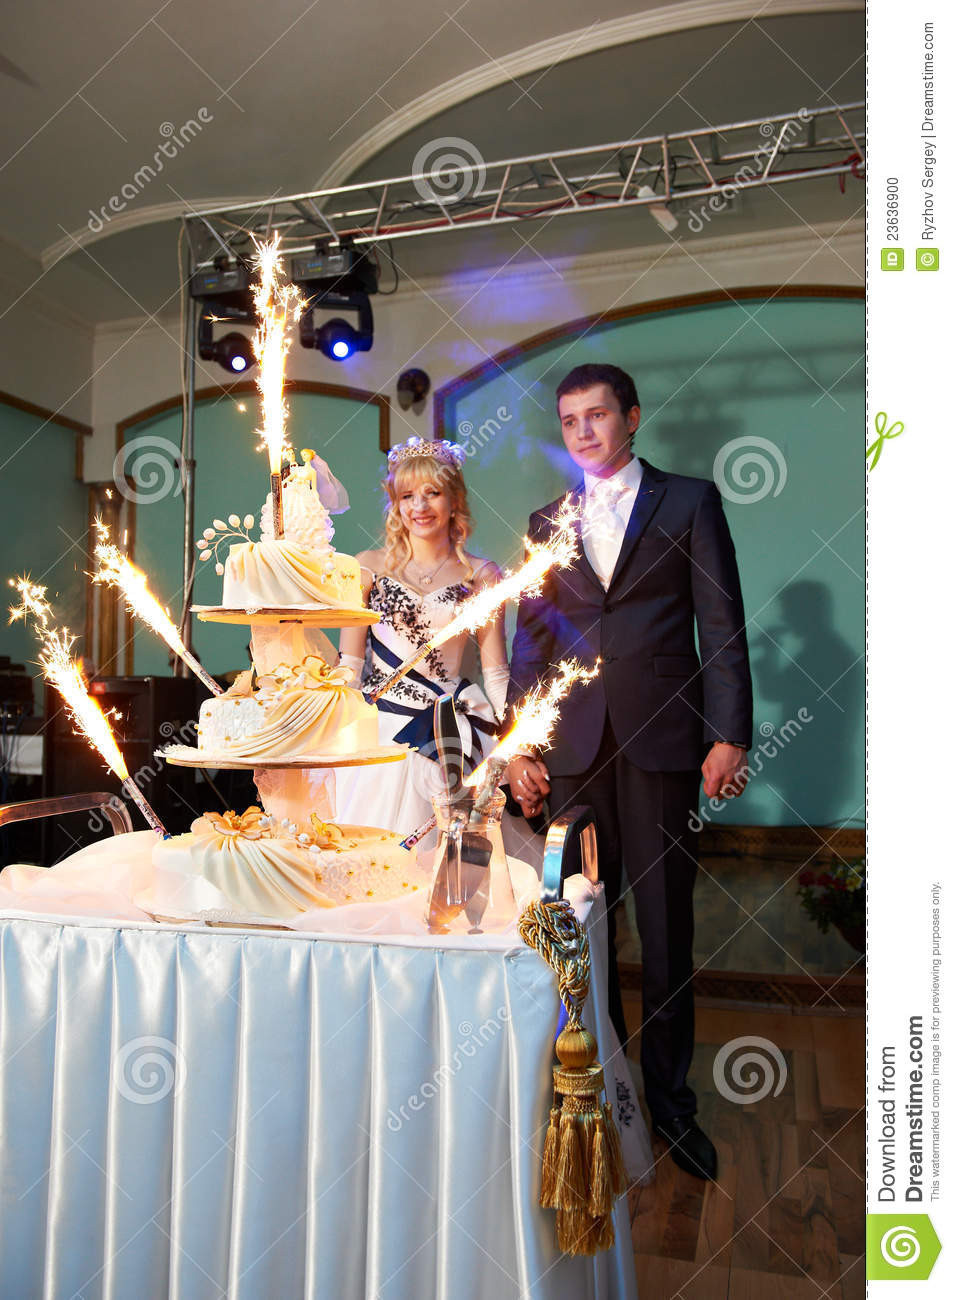 Wedding Cake Sparklers
 Wedding Cake With Sparklers And Newlyweds Stock